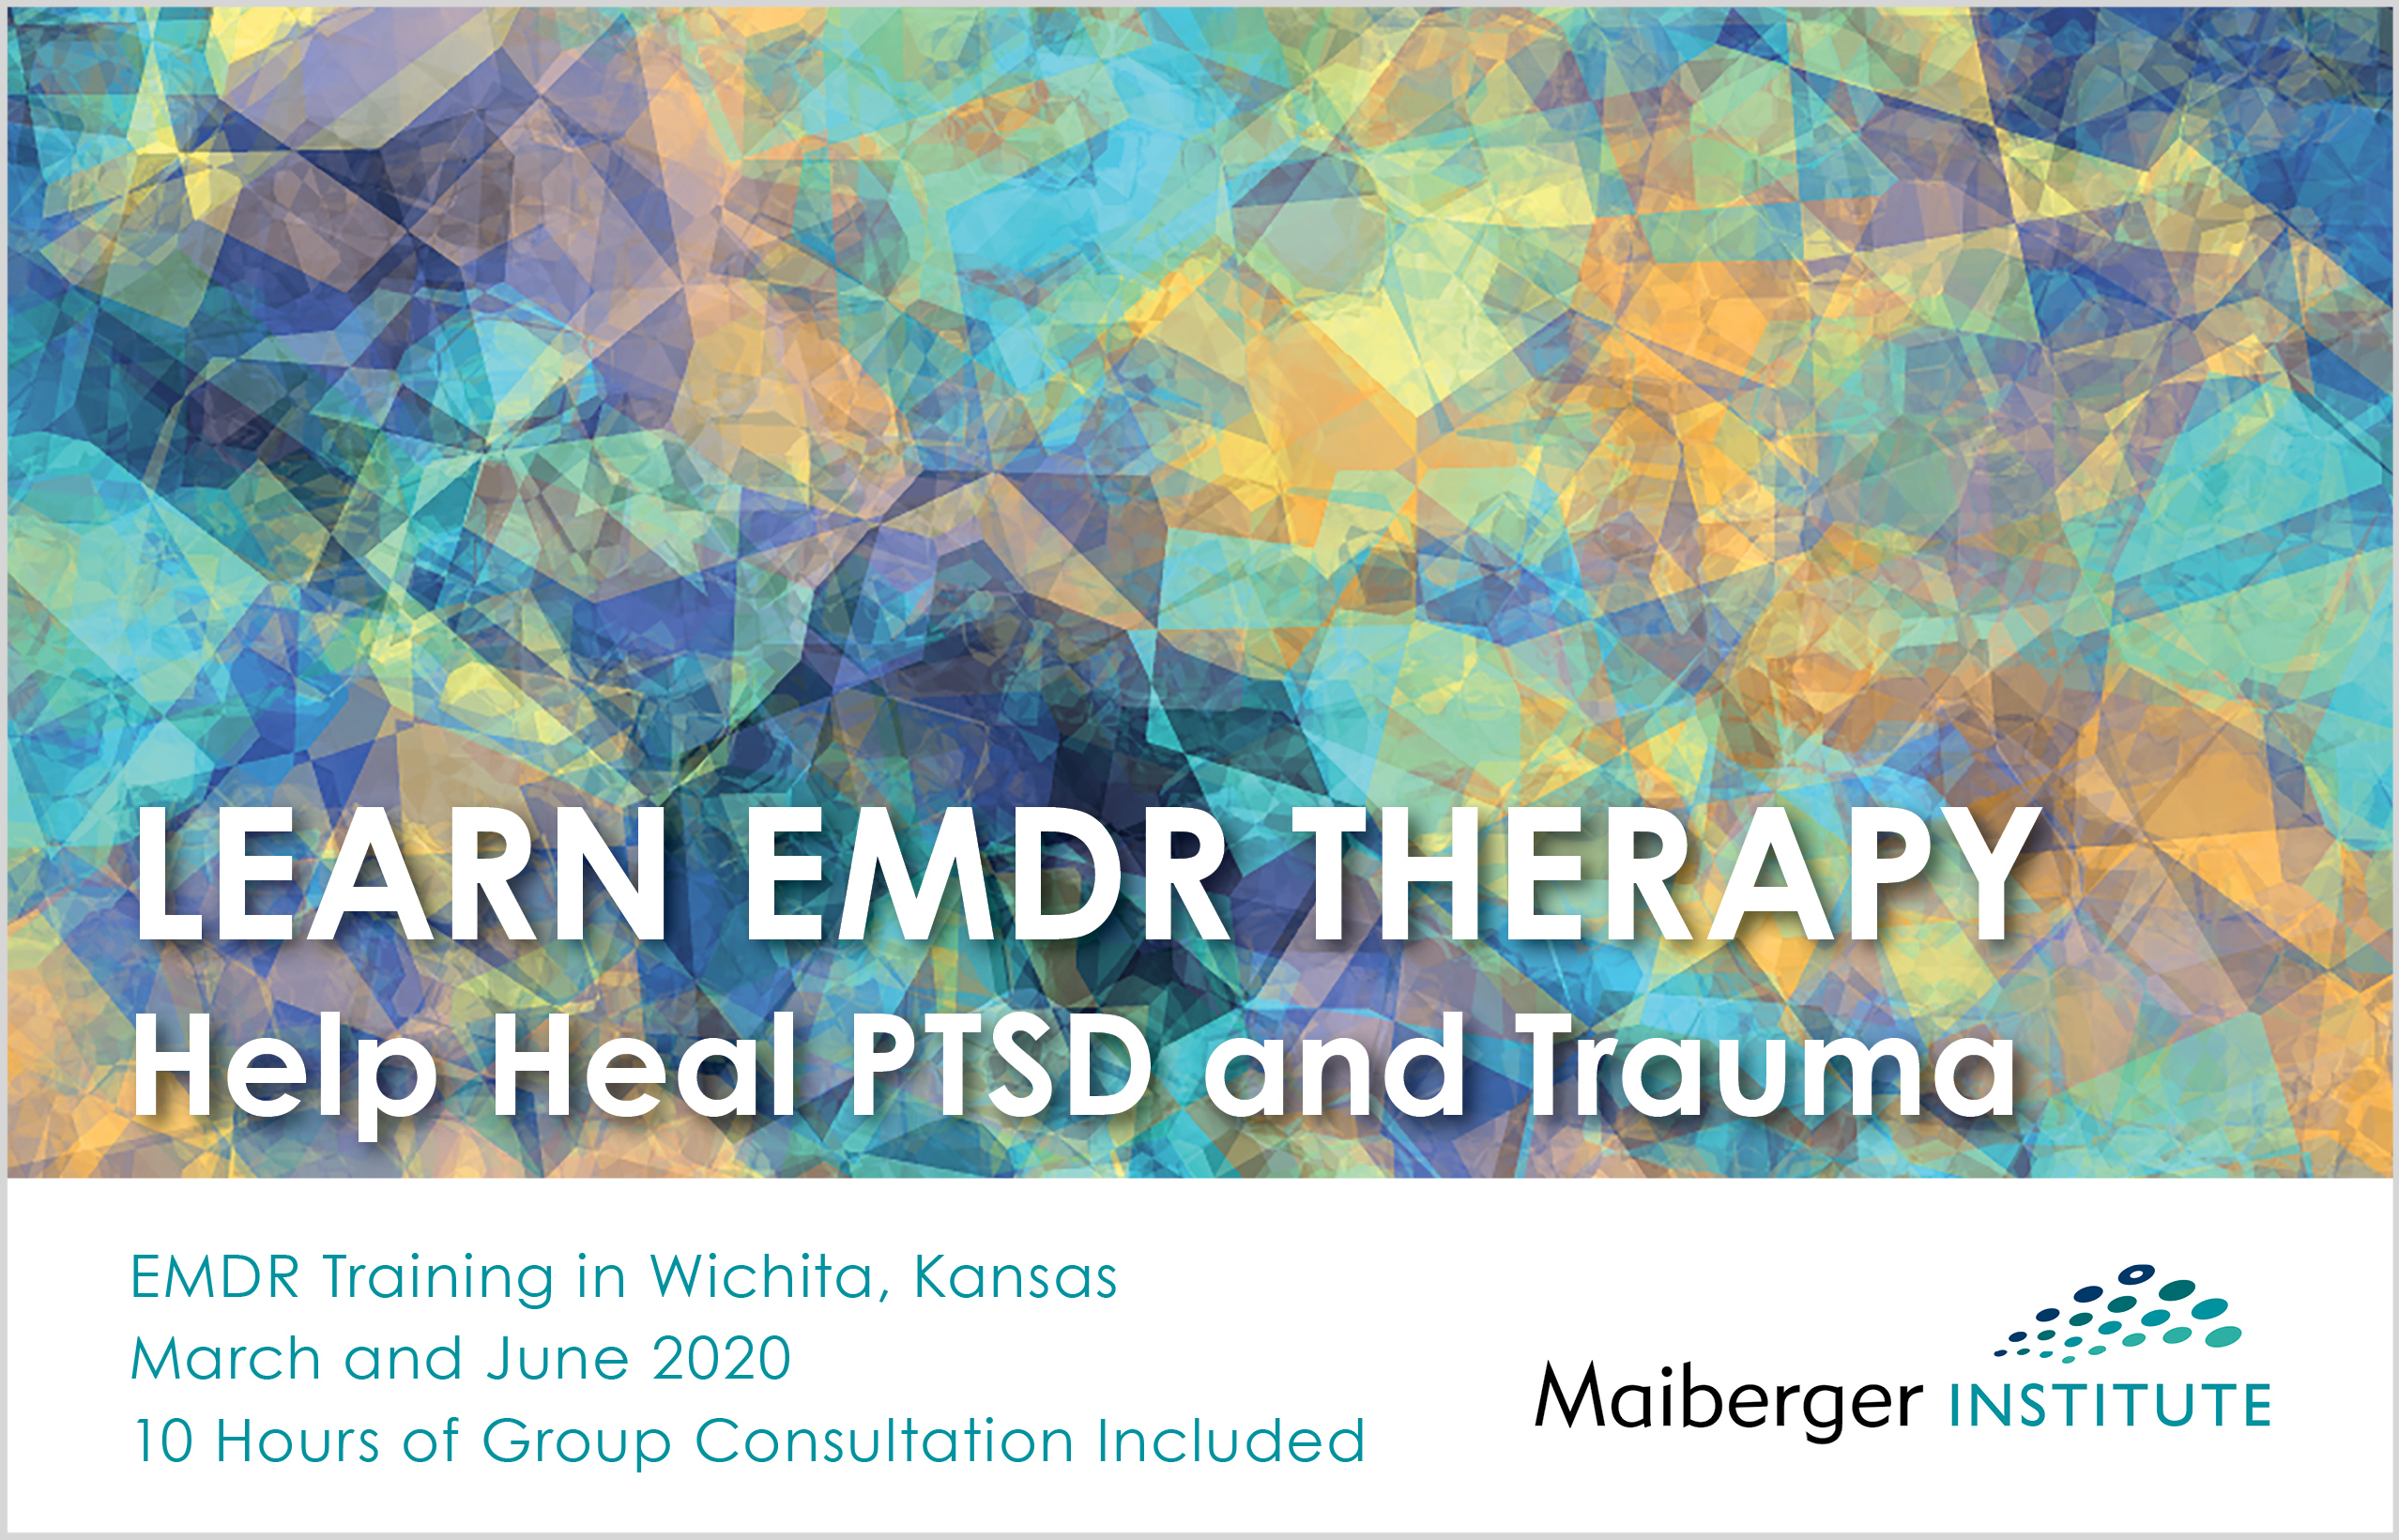 EMDR Training in Wichita Kansas March 27-29 June 26-28 2020D - Maiberger - Featured Image - 20191029